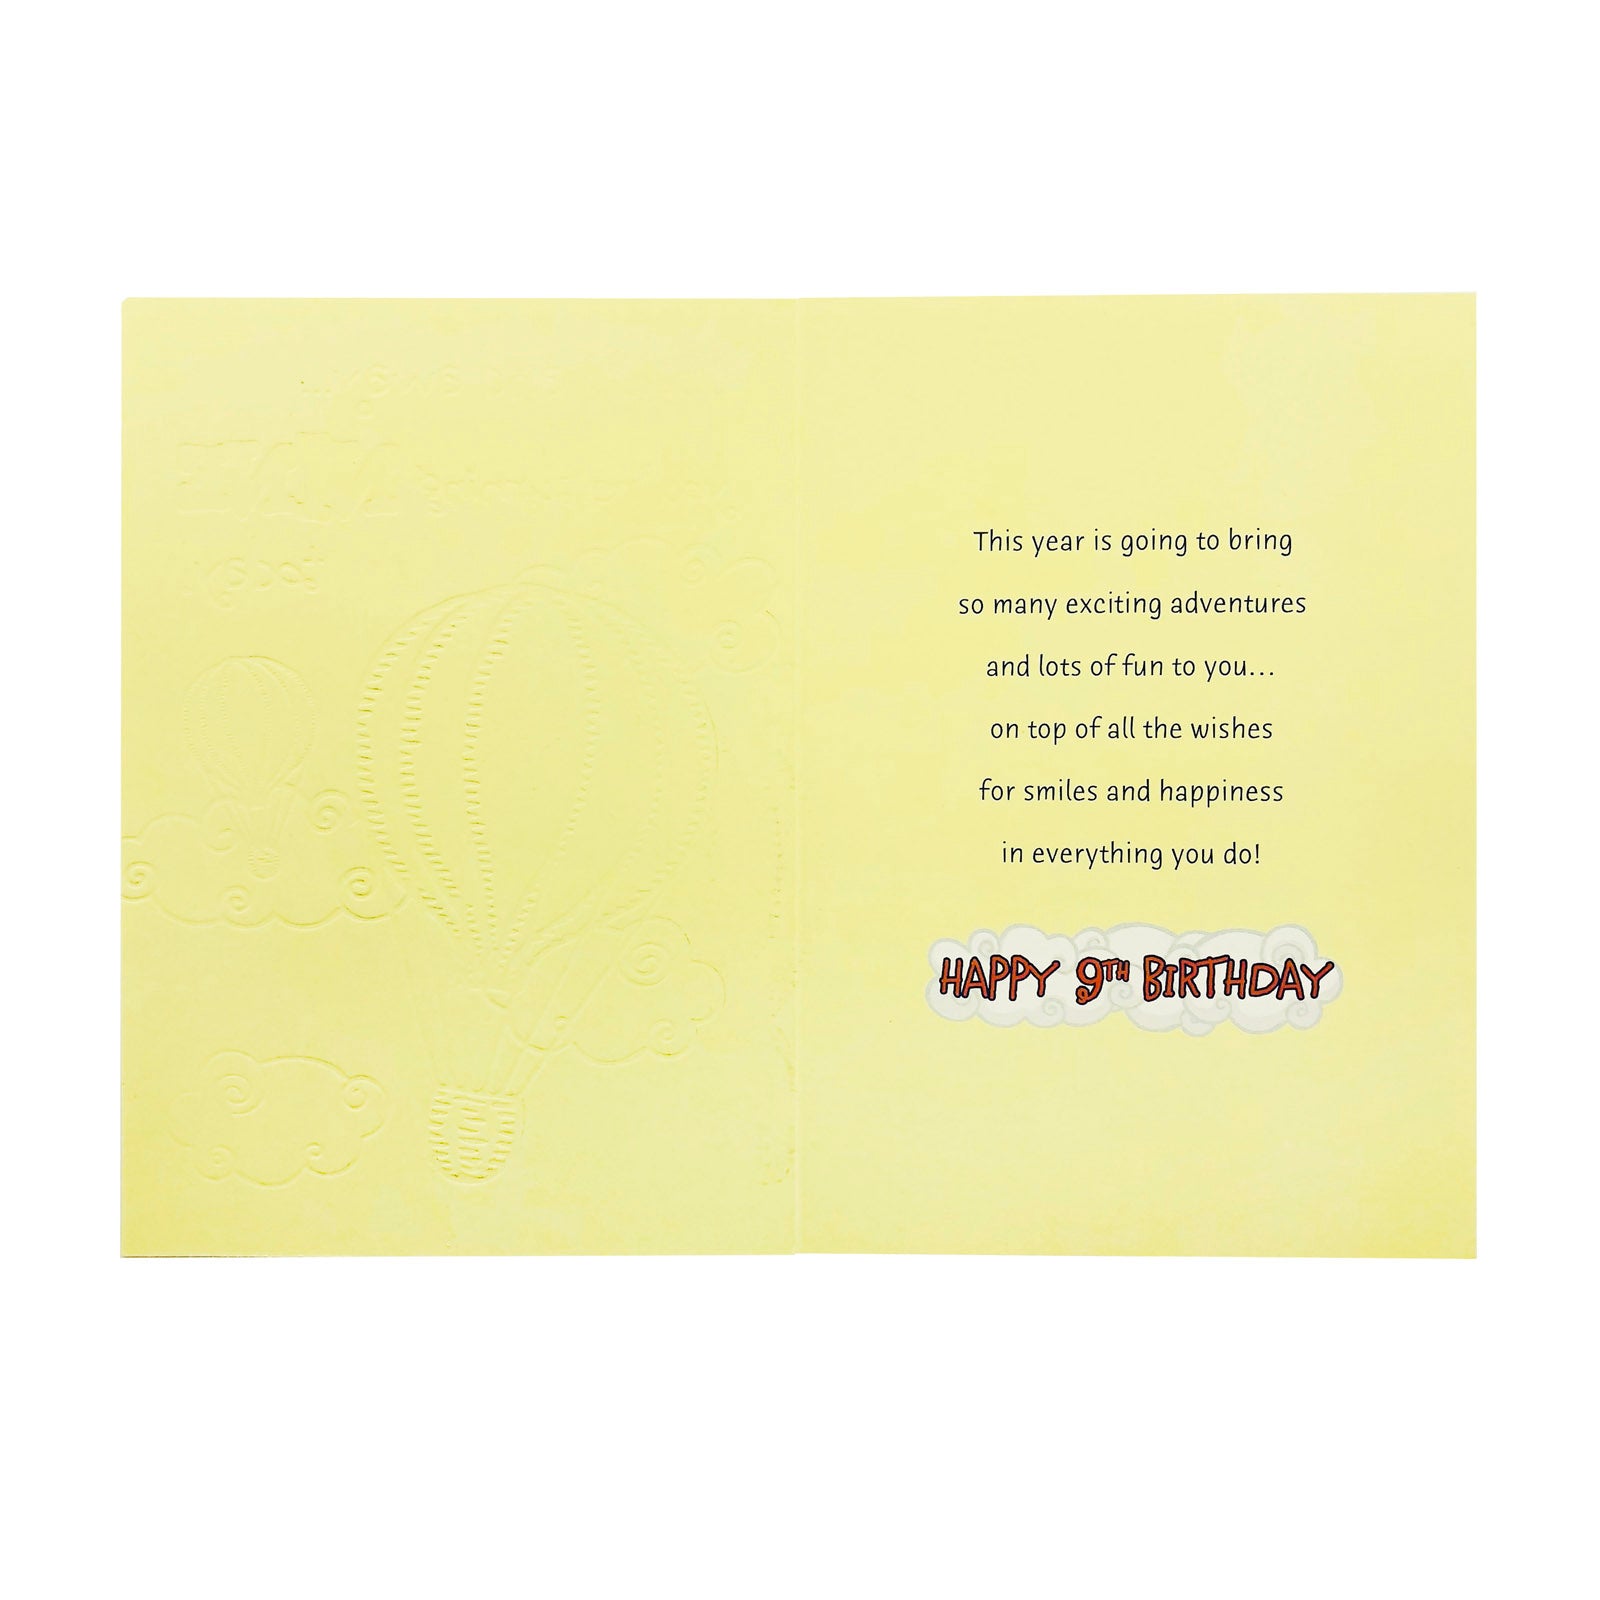 Designer Greetings Birthday Card Age 9 - Up Up And Away Hot Air Balloon